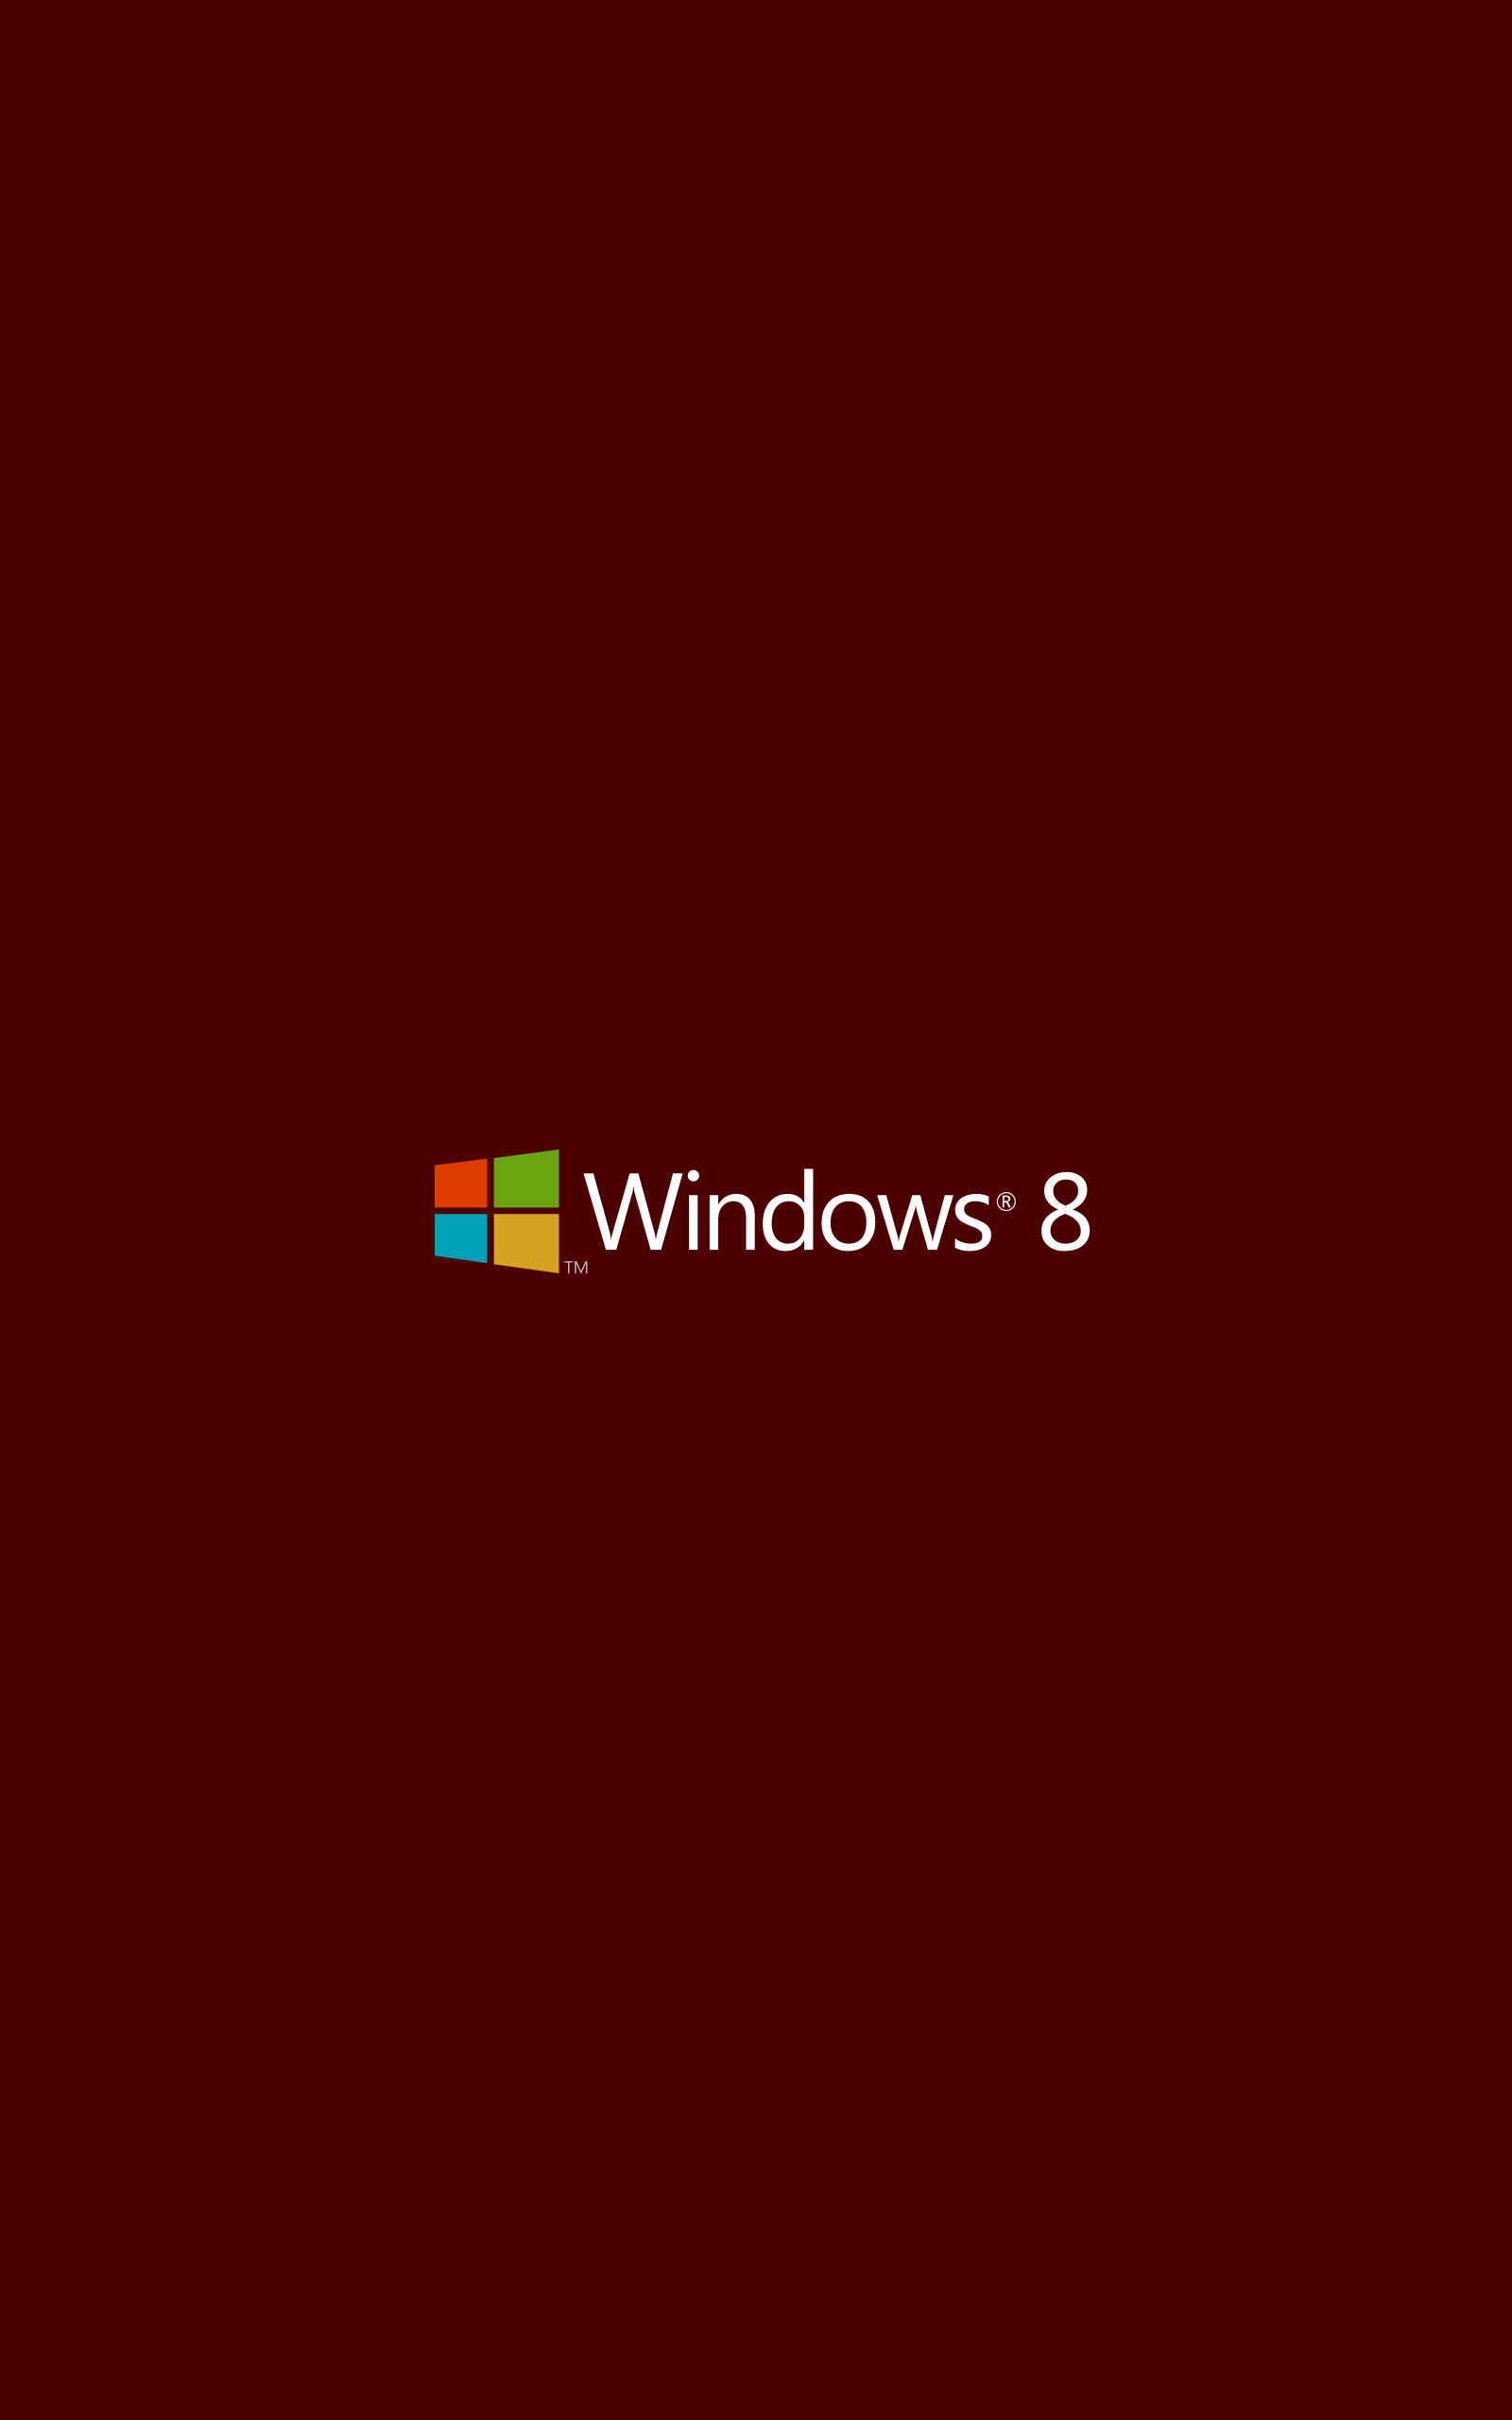 General 1600x2560 Microsoft Windows operating system minimalism portrait display logo red background simple background